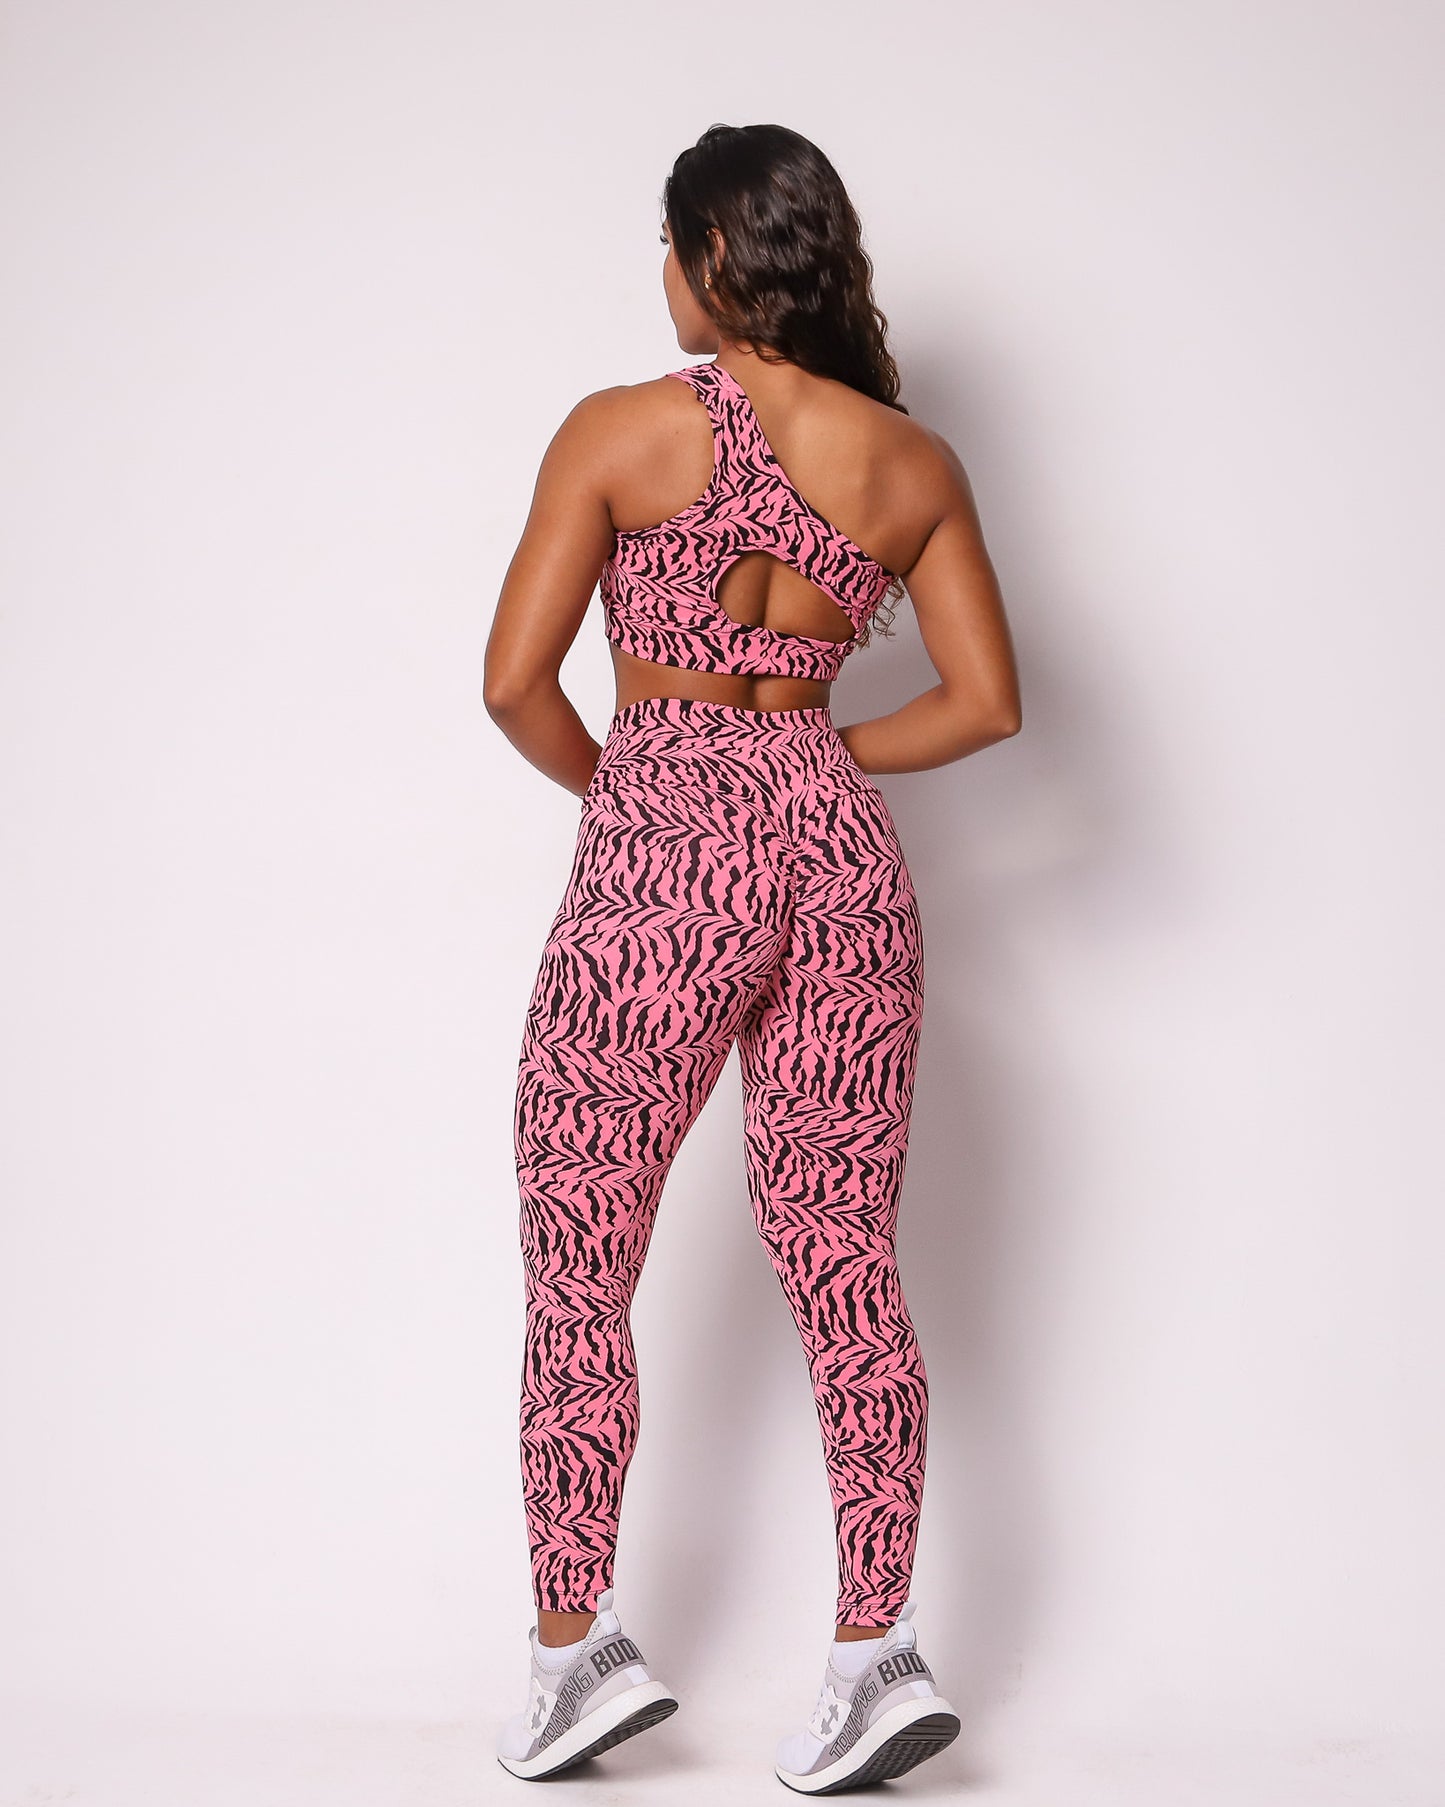 Leggings Scrunch + Top of choice (Pink Zebra)